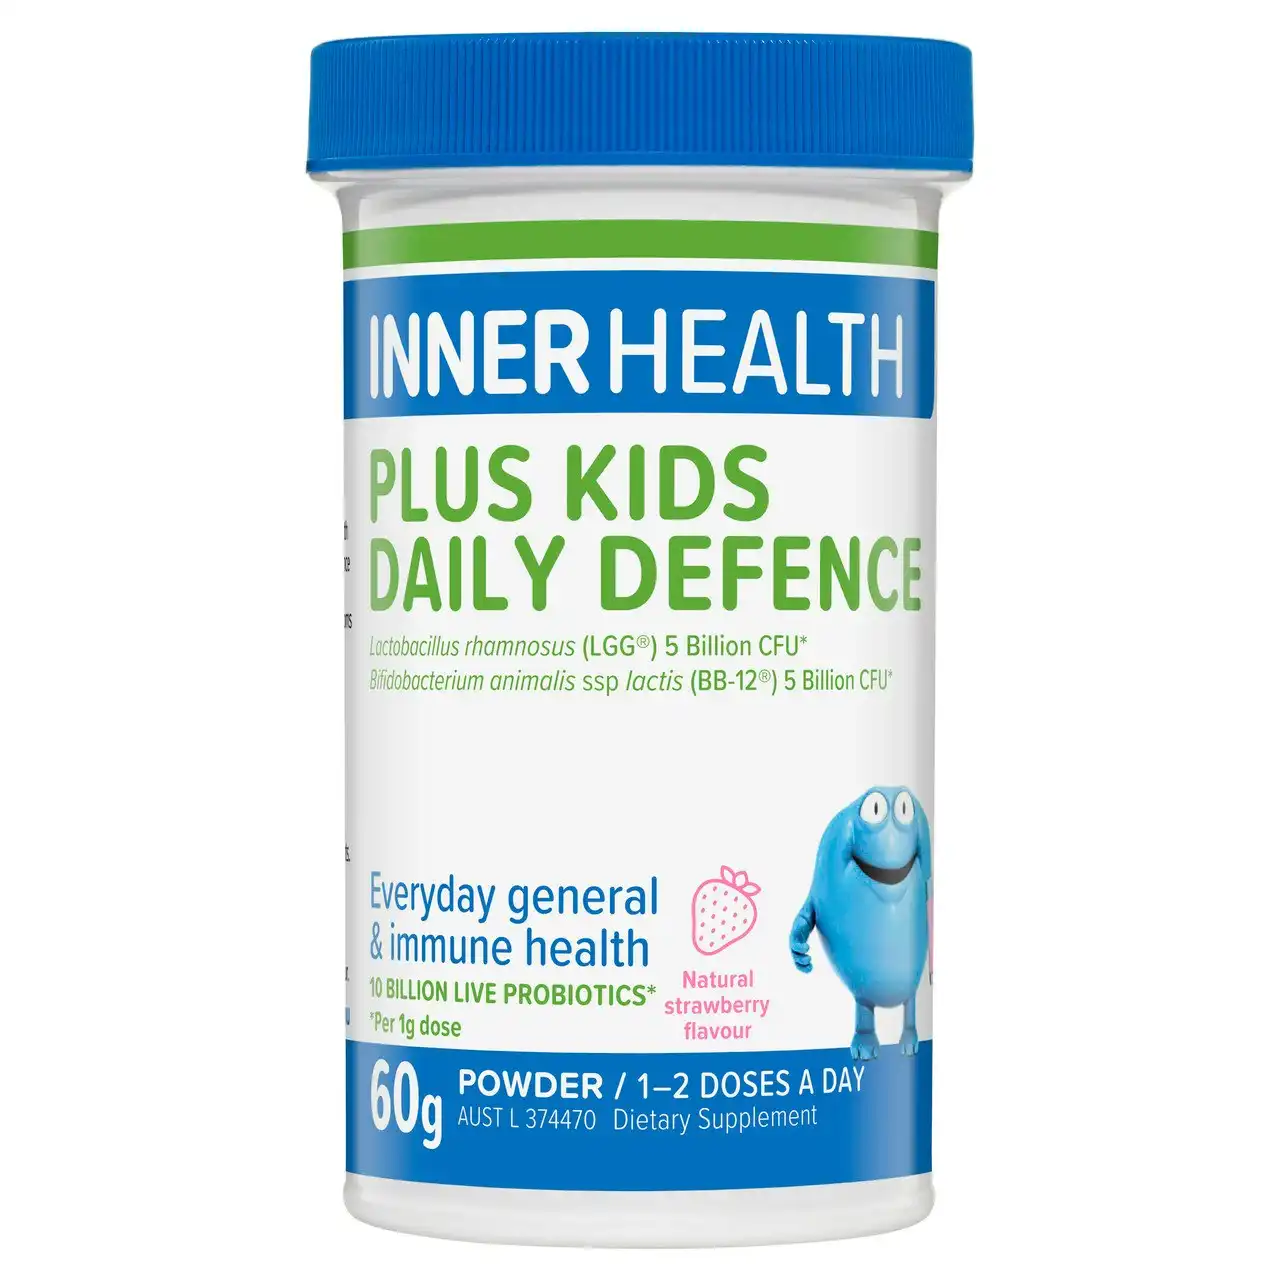 Inner Health Plus Kids Daily Defence Probiotic 60g Powder